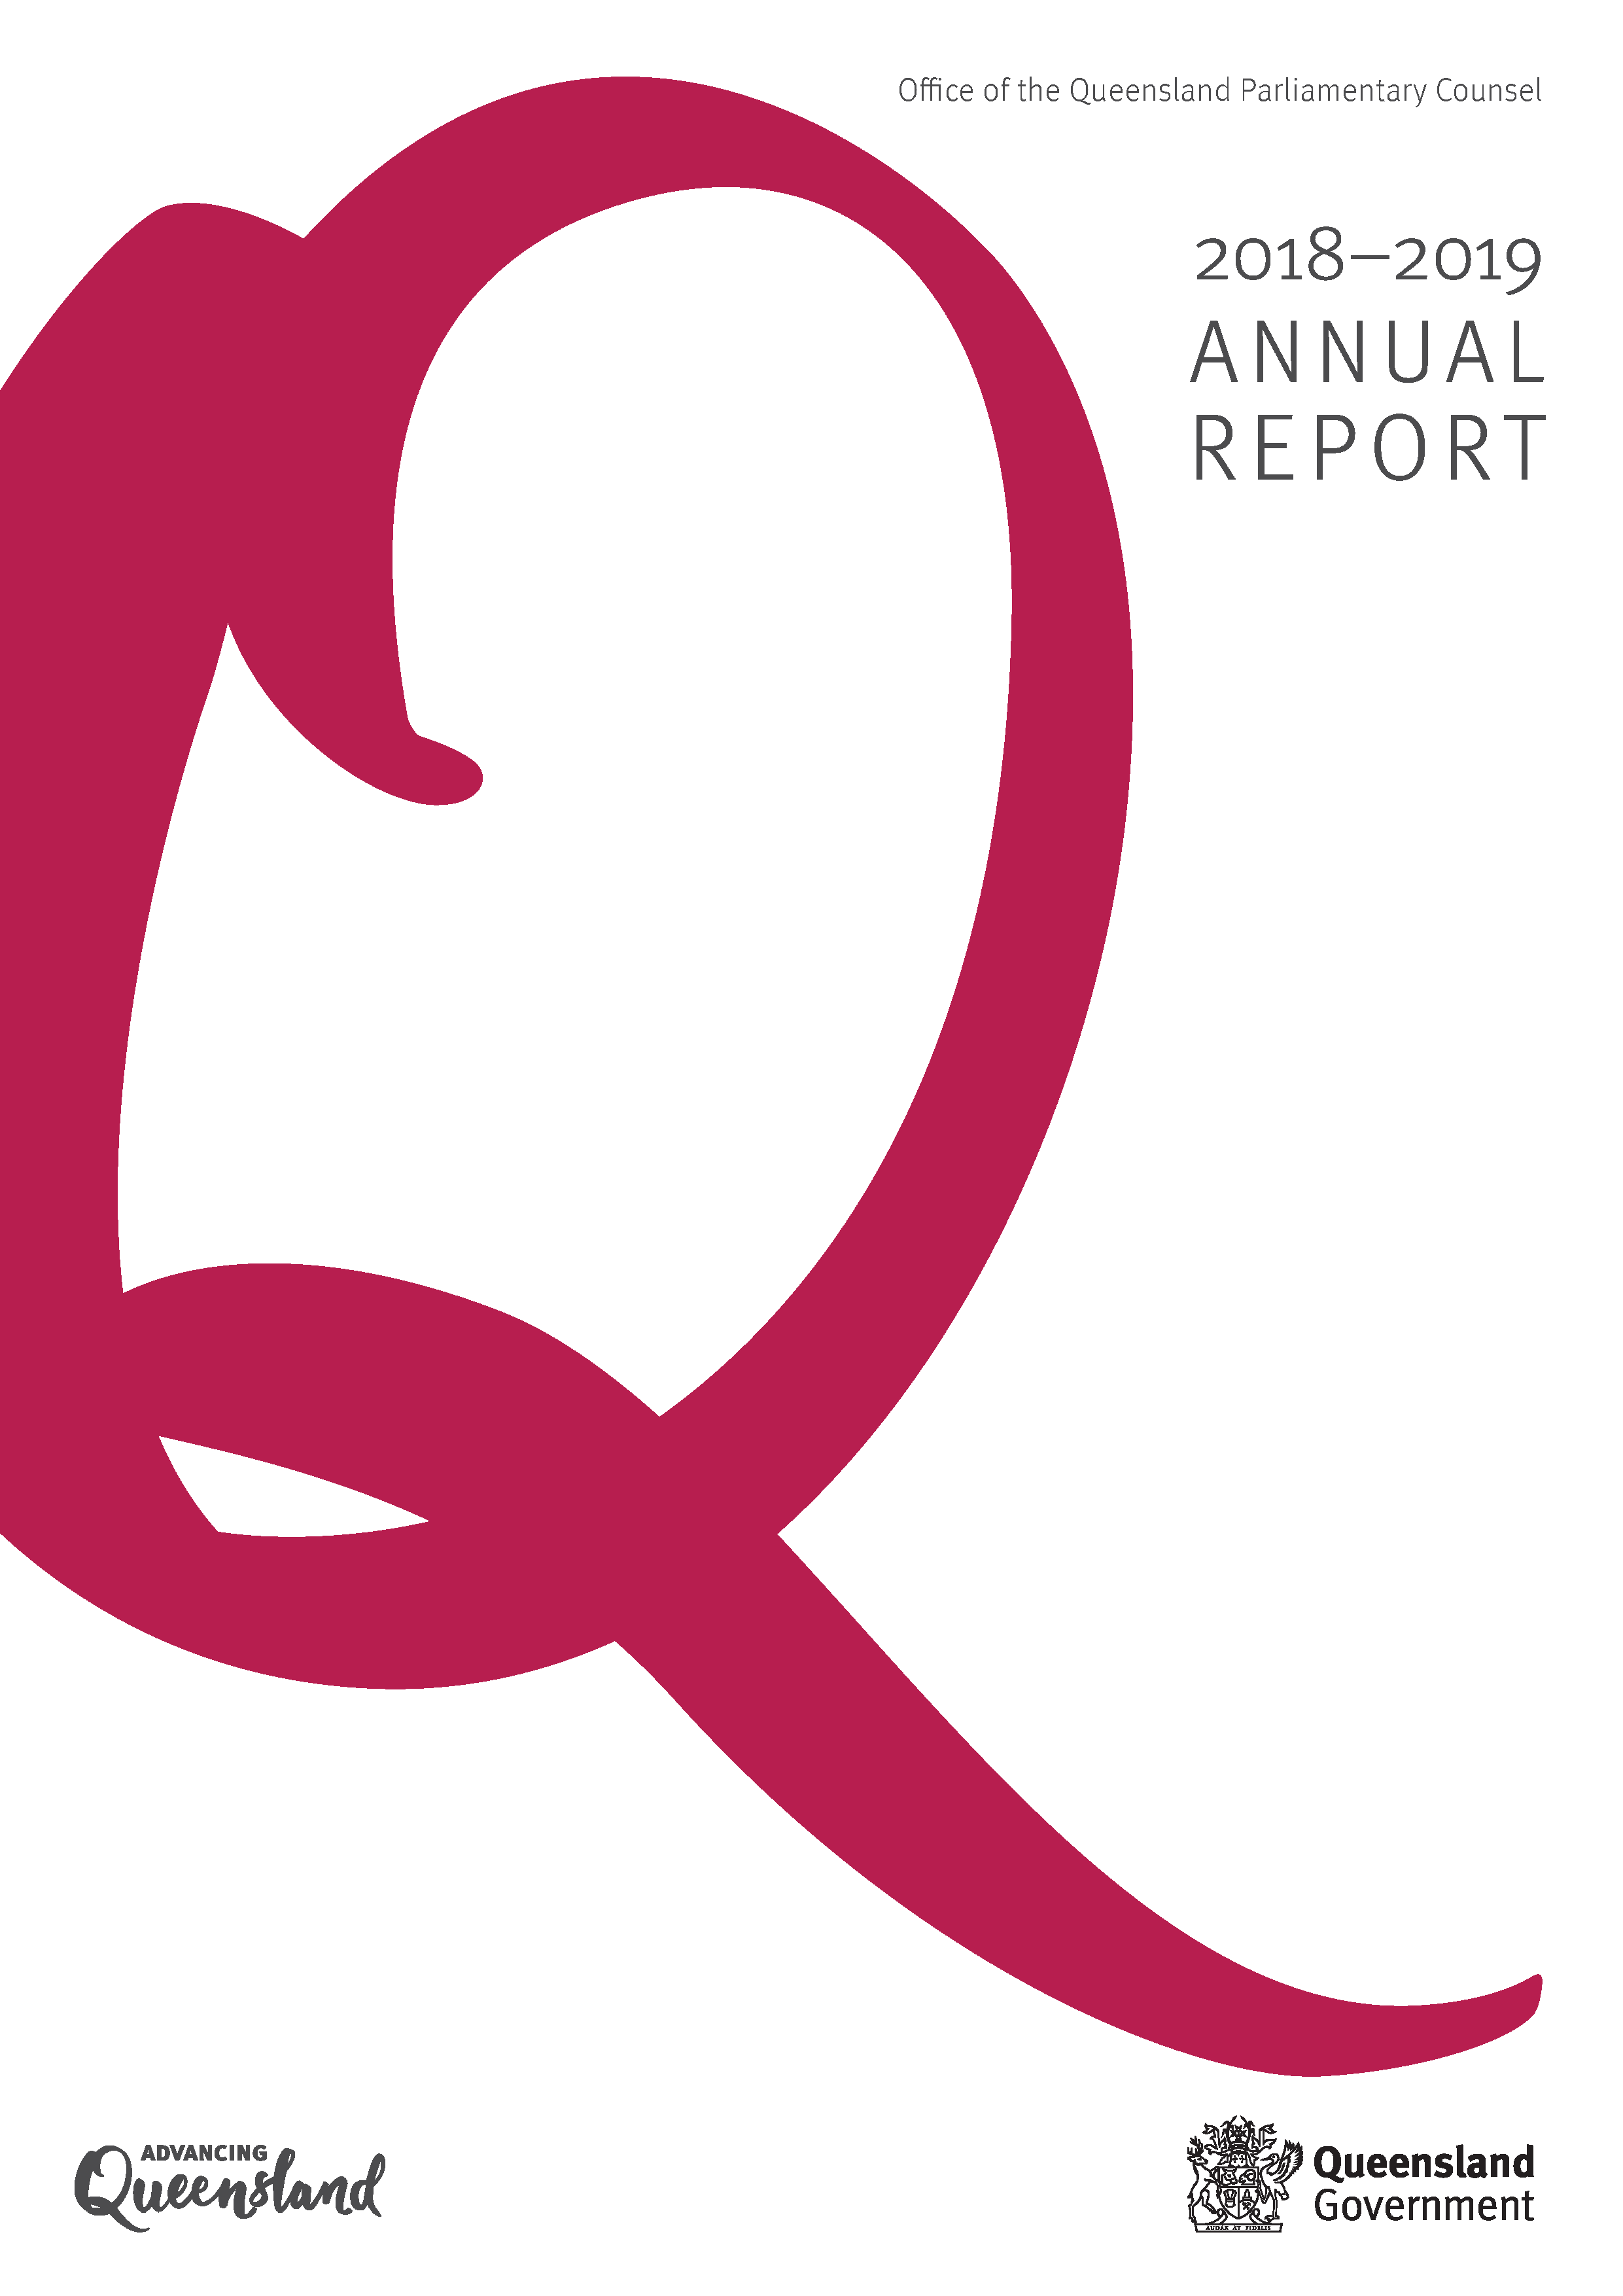 OQPC's Annual Report 2018-2019